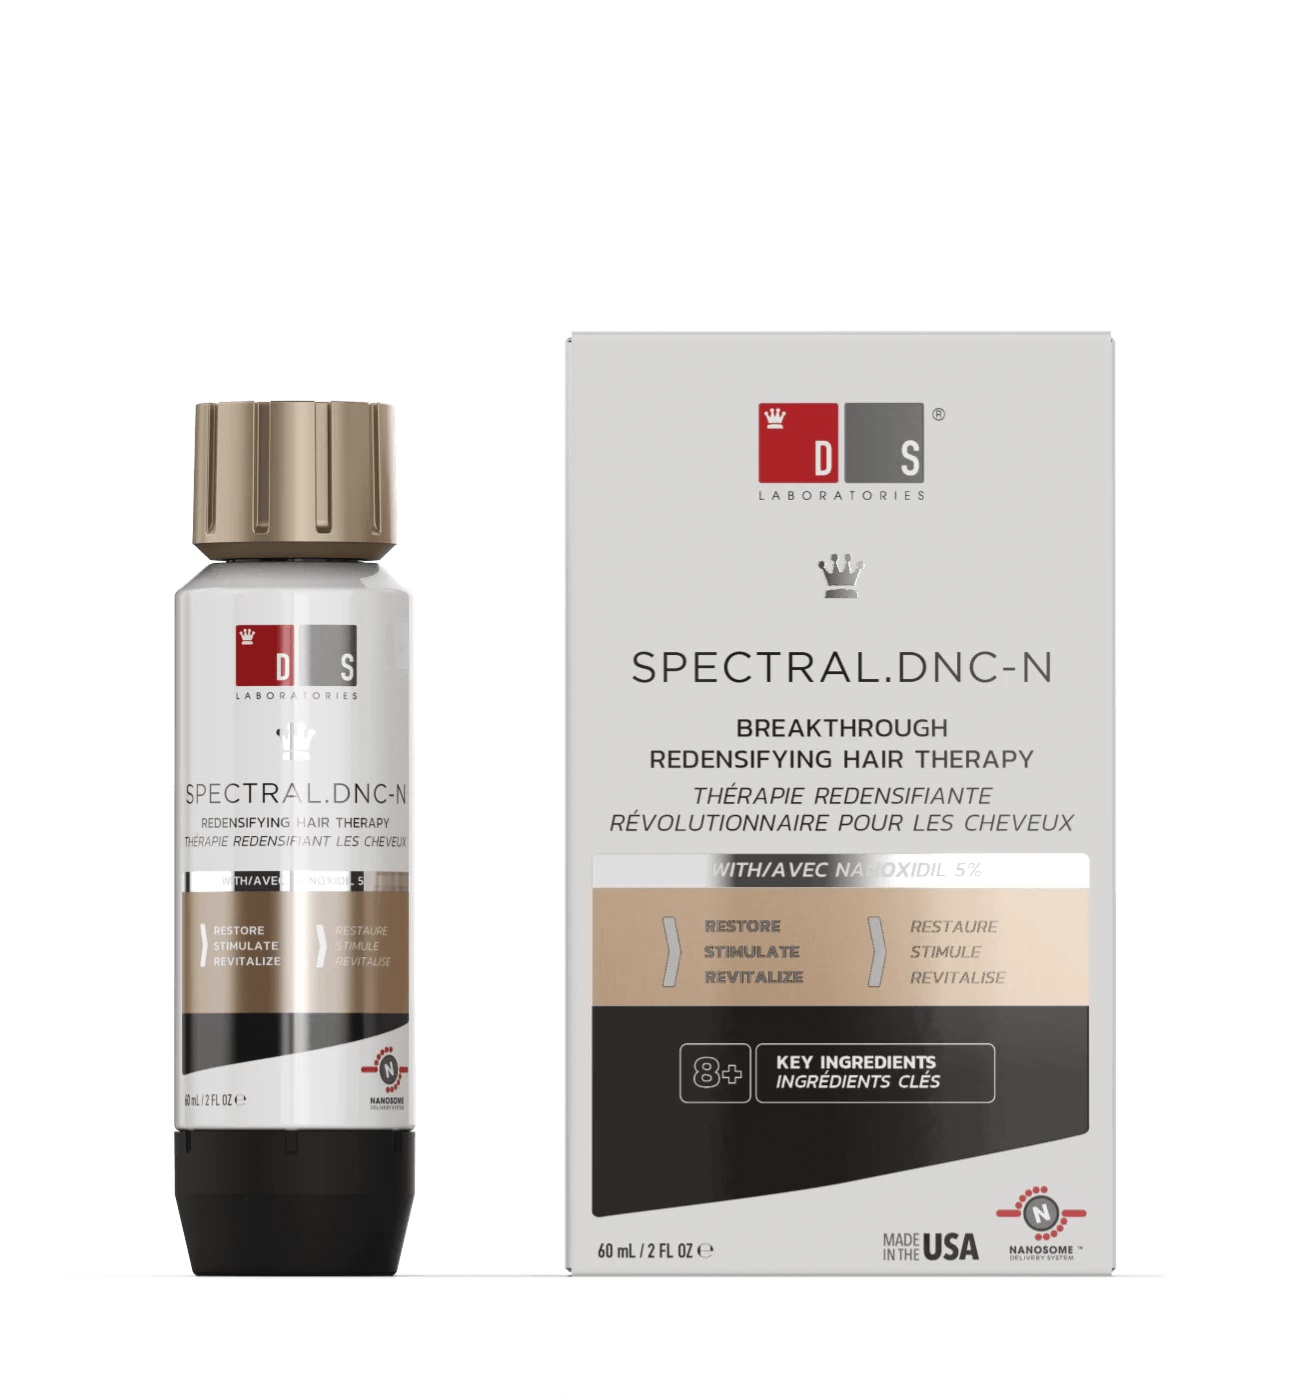 Spectral.DNC-N